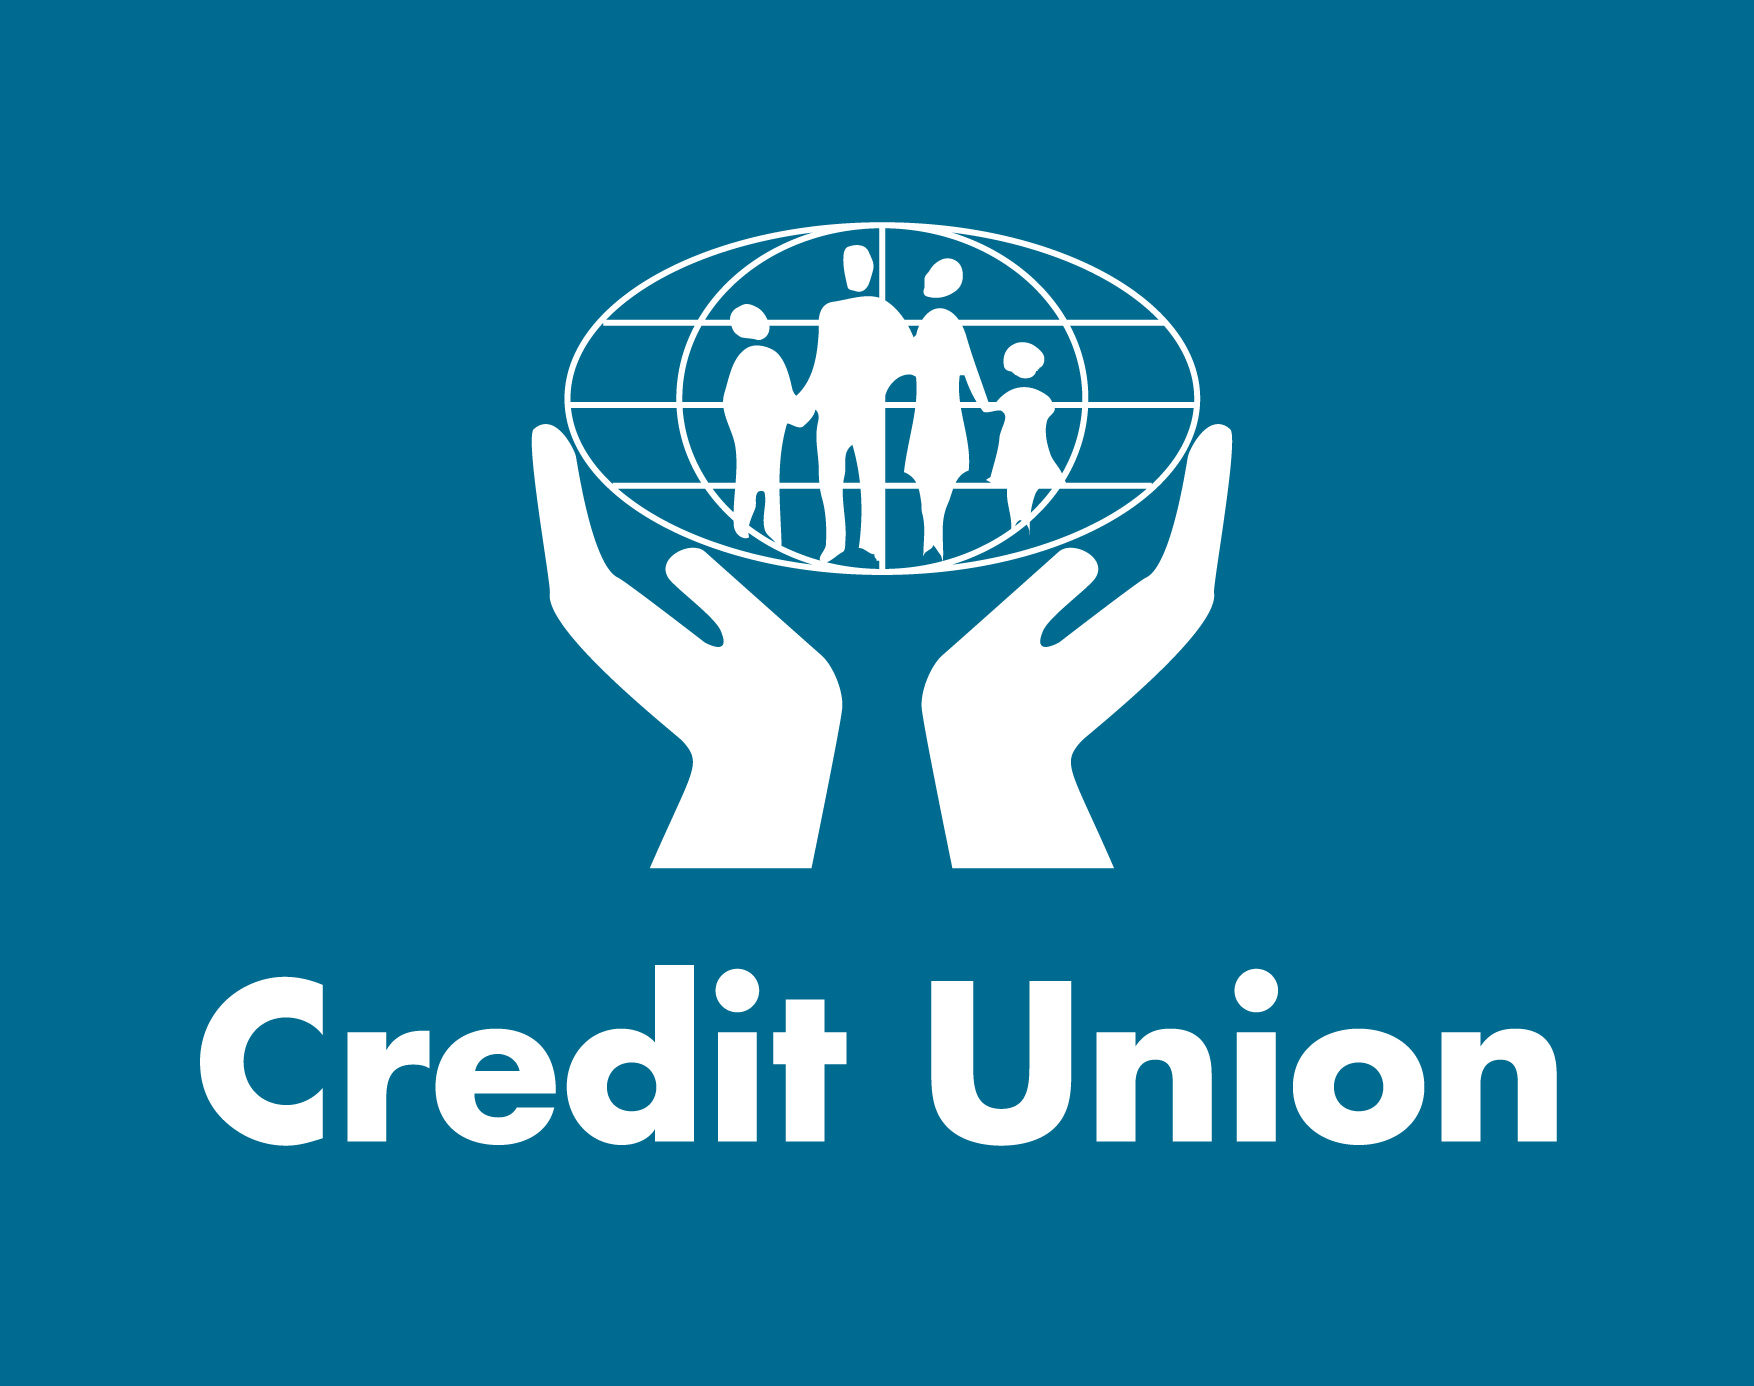 Credit Union logo PMS - Mulcair Credit Union Limited